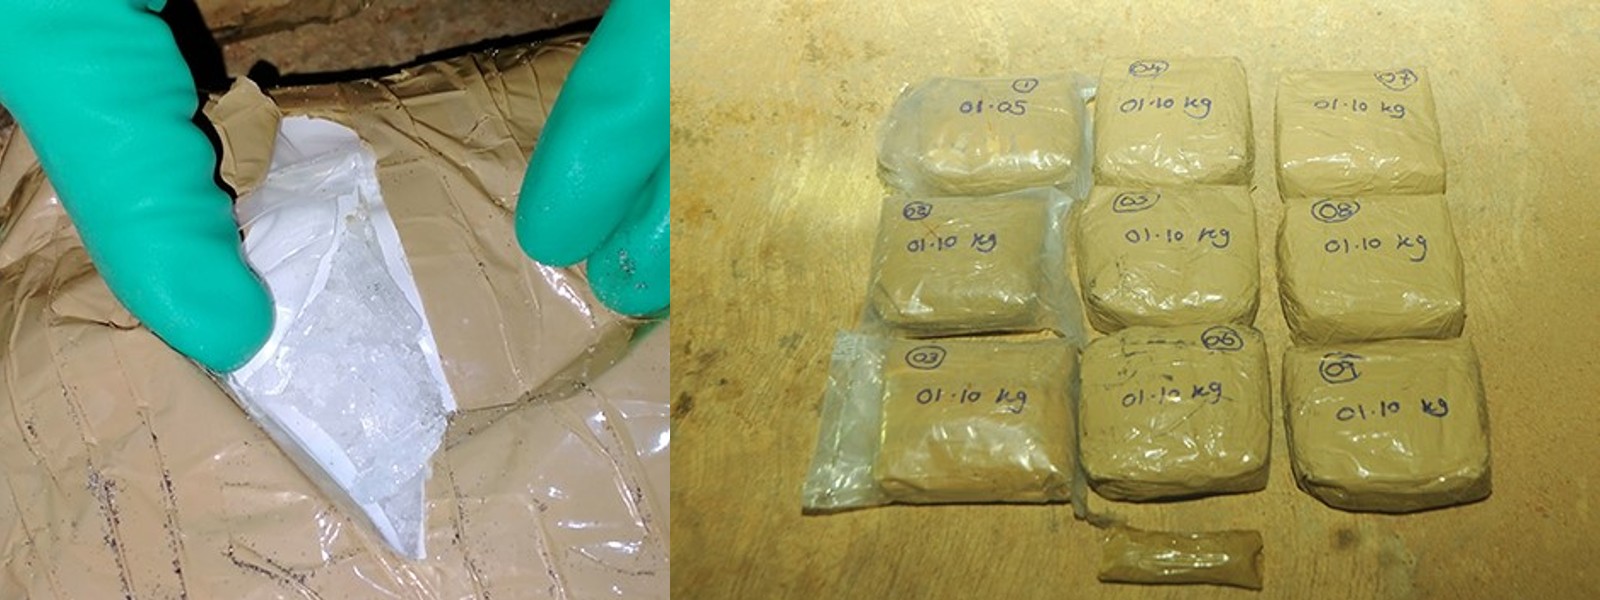 Navy seizes Crystal Methamphetamine (ICE) worth over Rs. 79 million